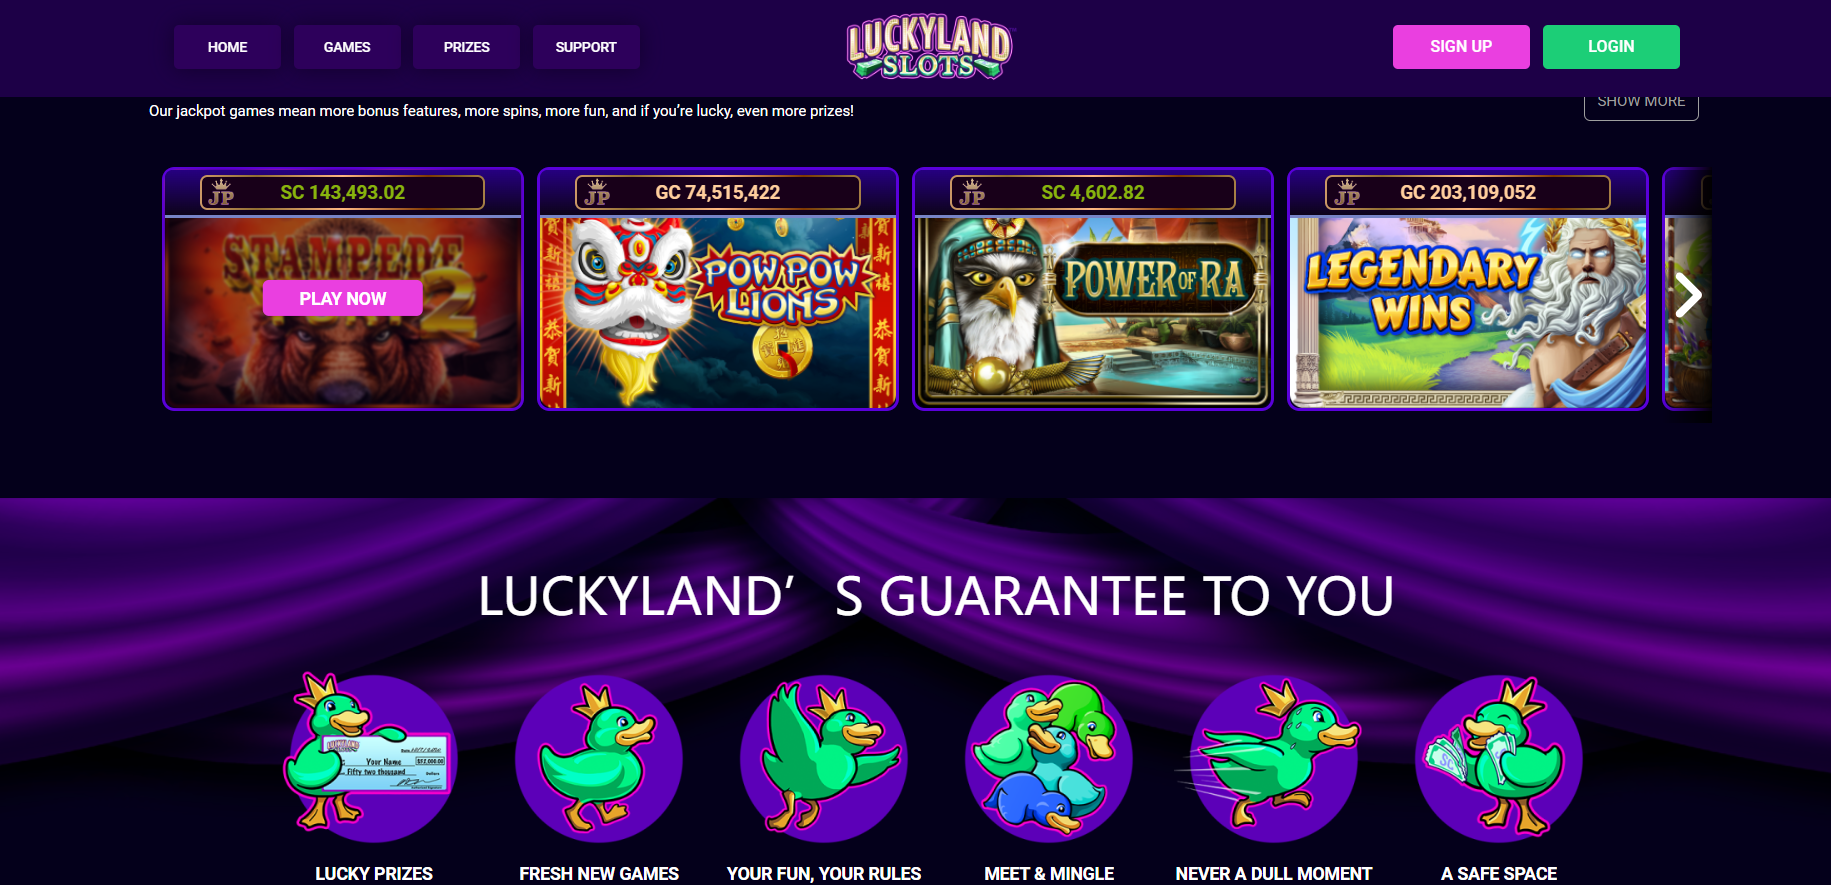 How to register on Luckyland 